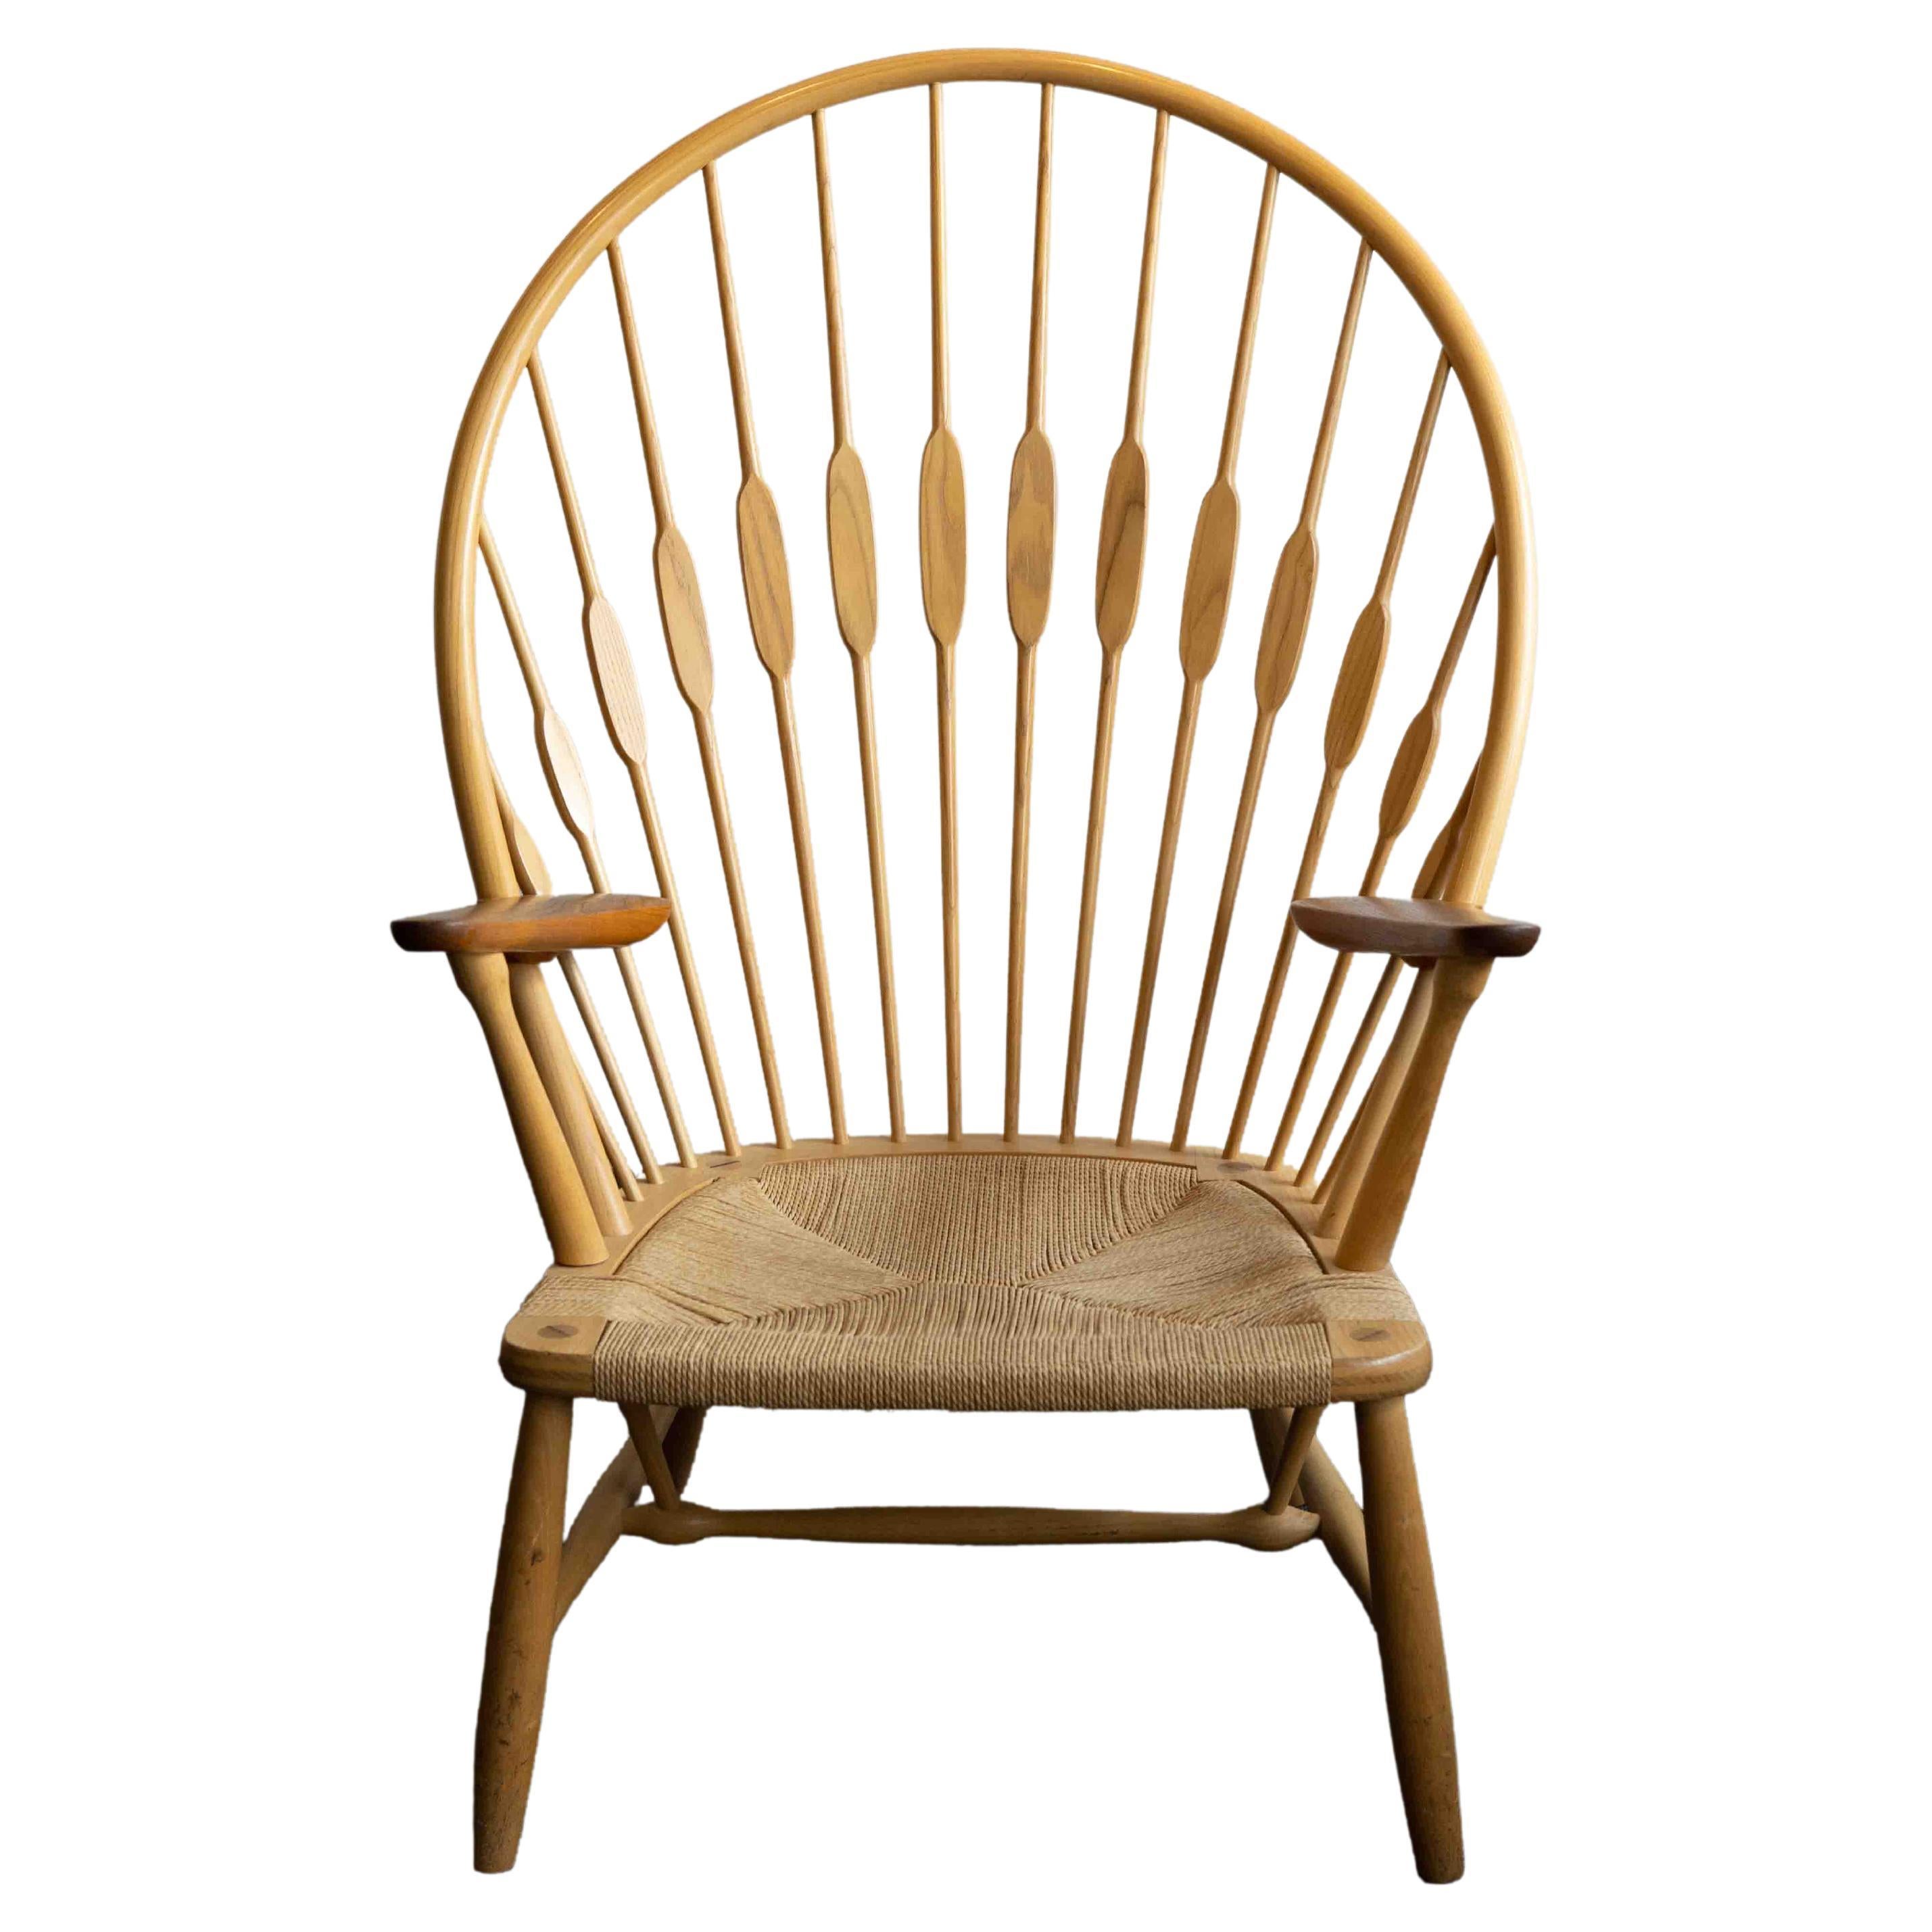 1960s Mid-Century Modern Hans Wegner Peacock Chair